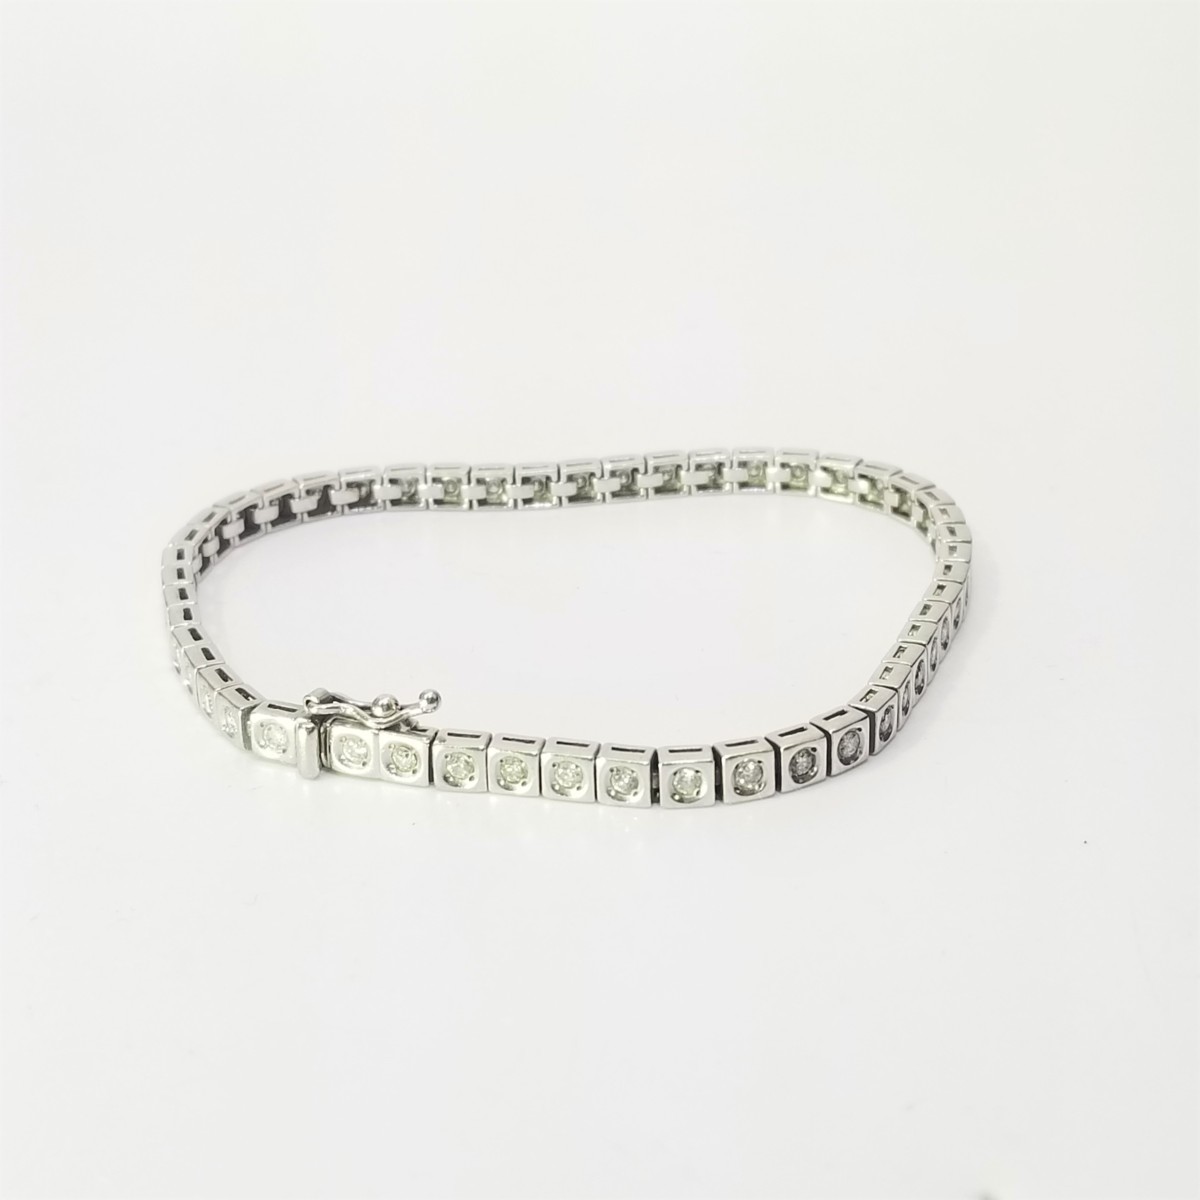  jewelry Pt850 full Eternity diamond 49 stone tennis bracele total 1.00ct arm circumference 16cm till platinum 